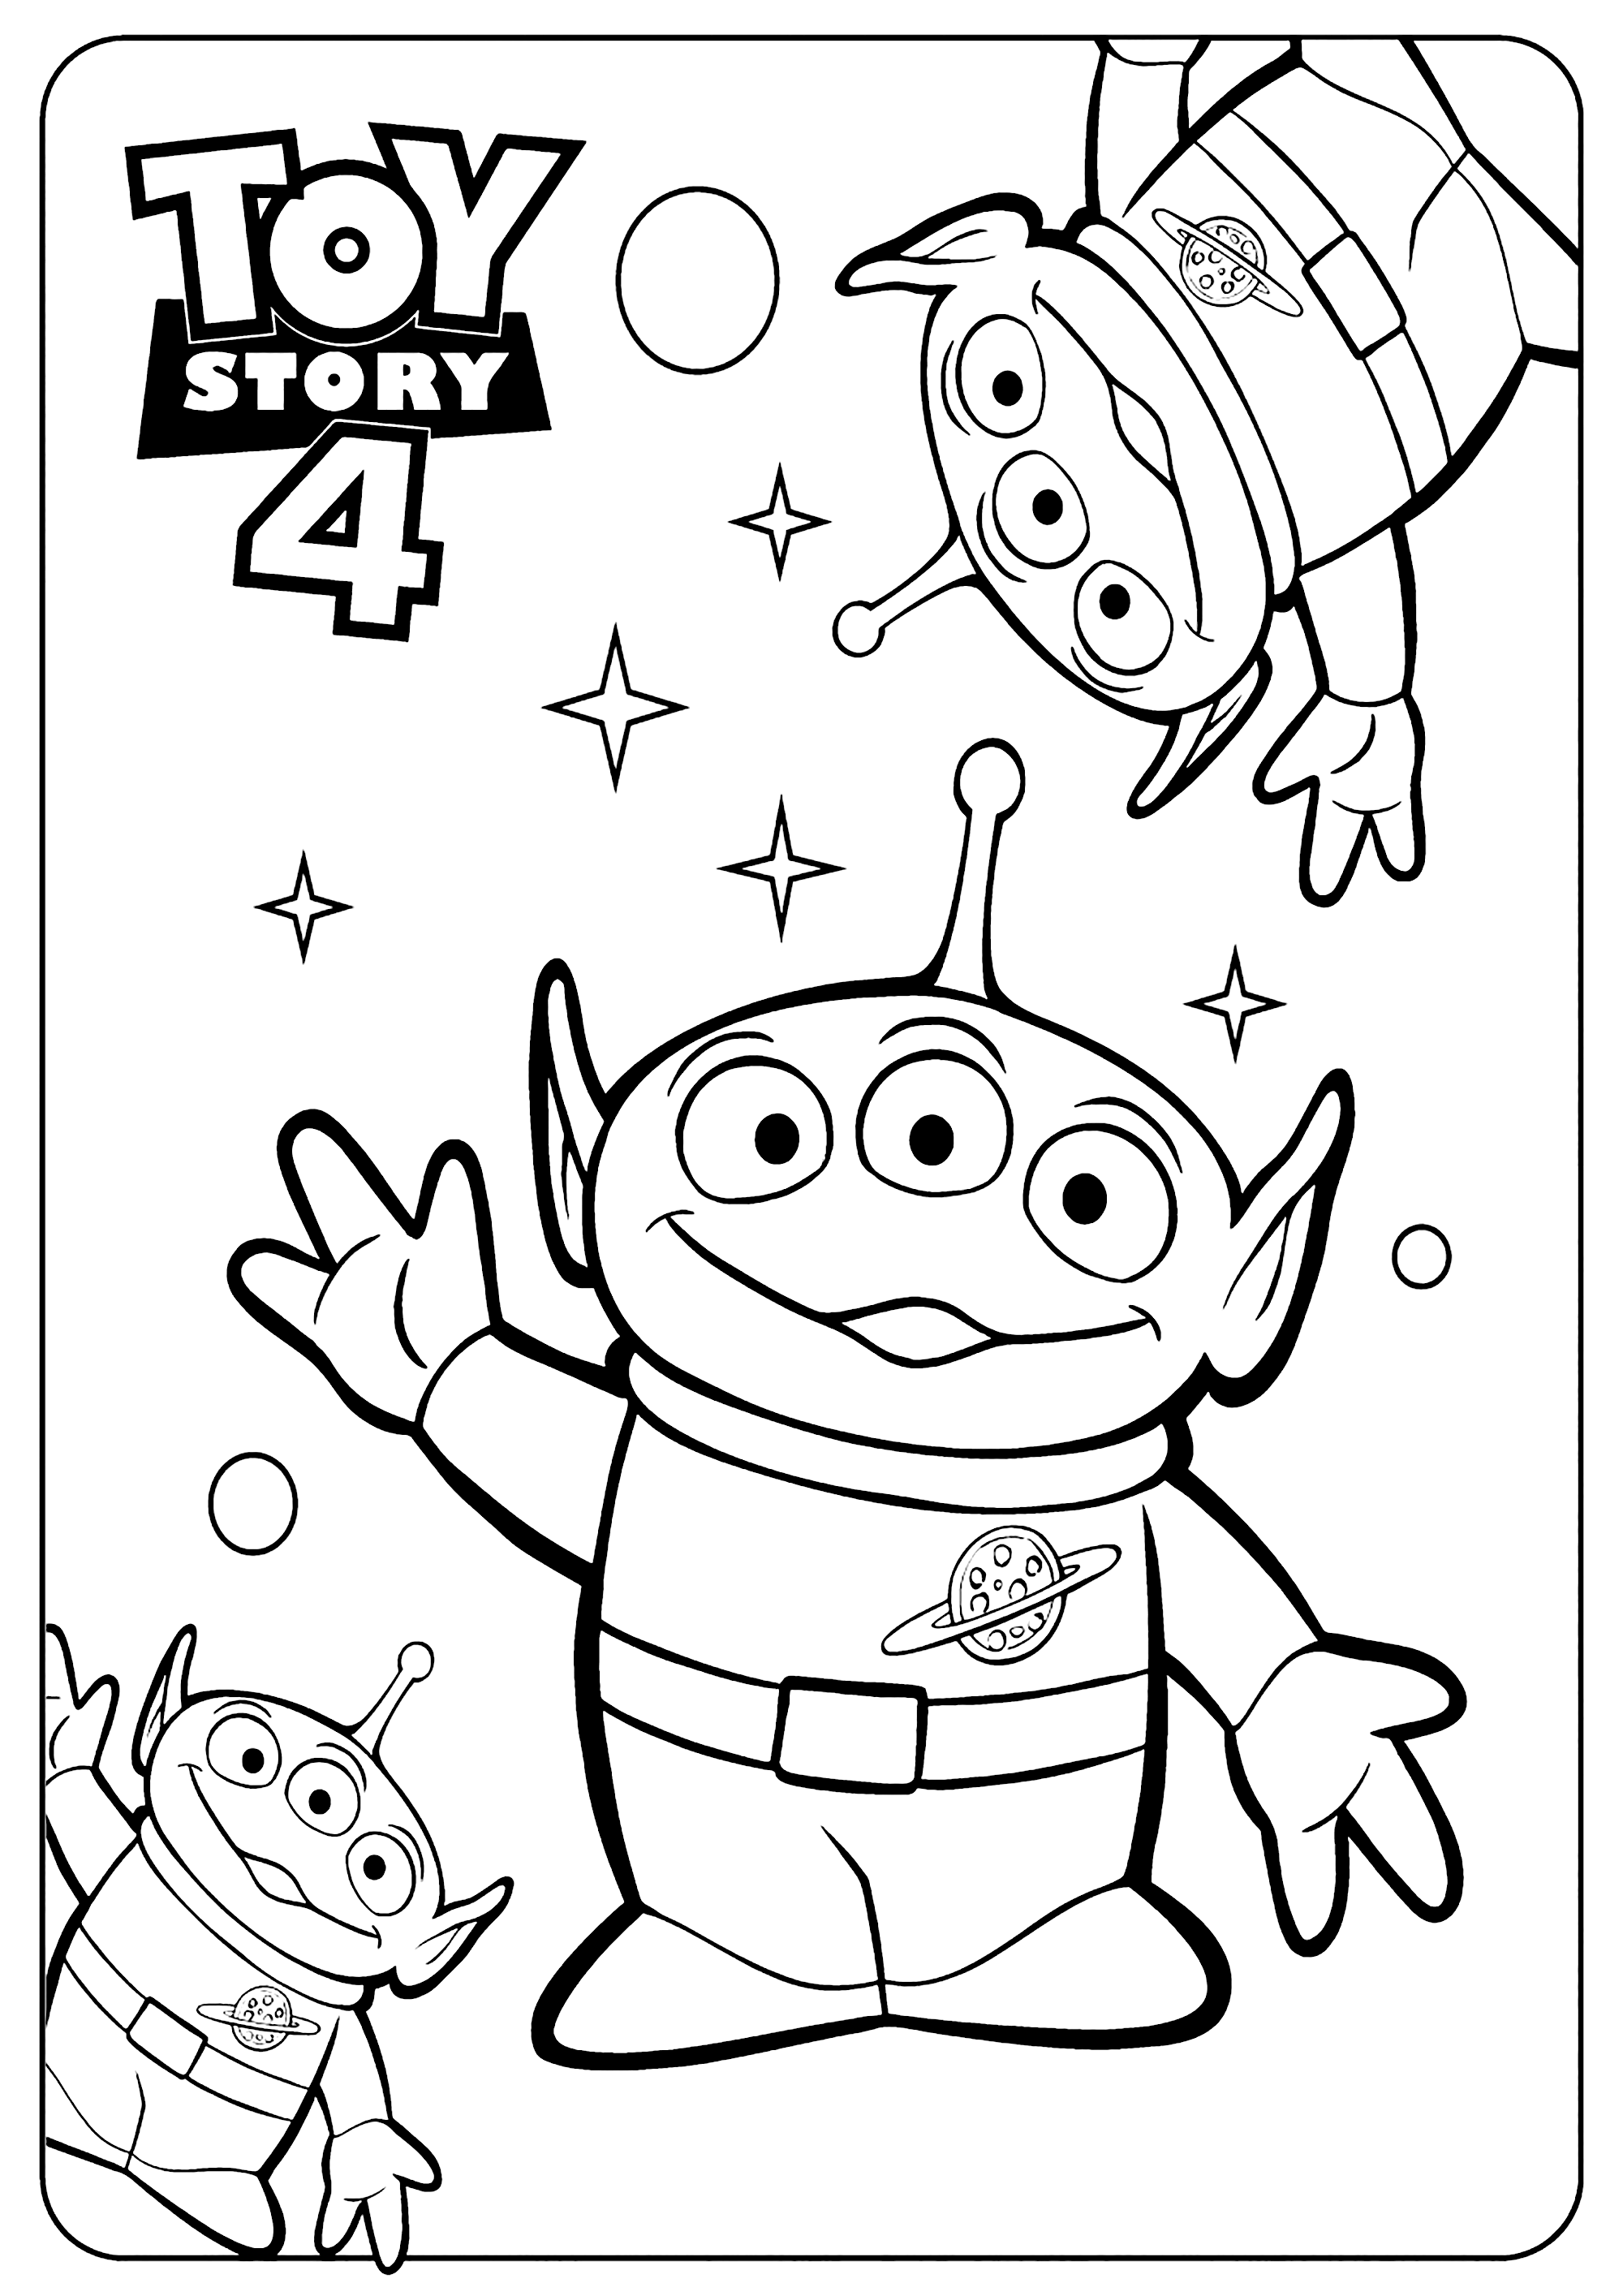 Bo Peep Toy Story 4 Coloring Page Disney Pixar Toy Story 4 Kids Coloring Pages